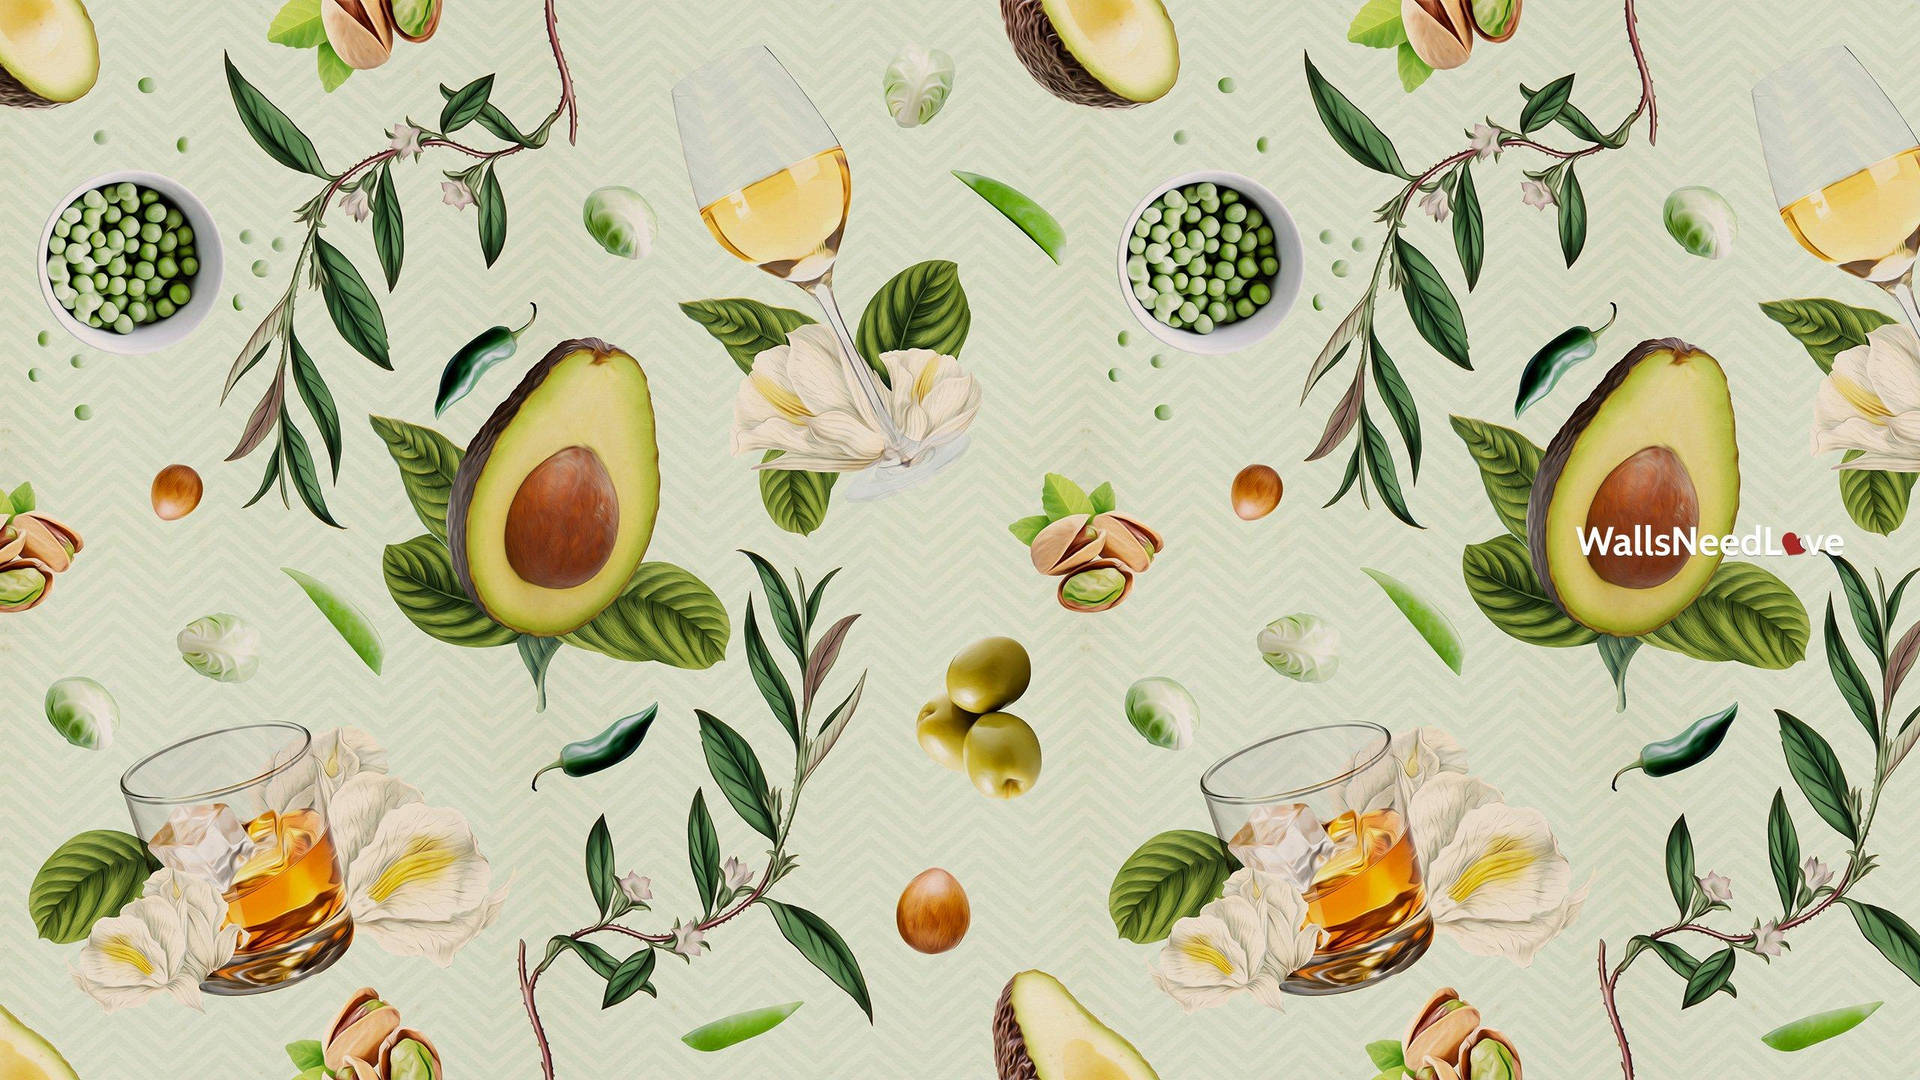 Aesthetic Avocado Fruit Patterned Digital Illustration Wallpaper